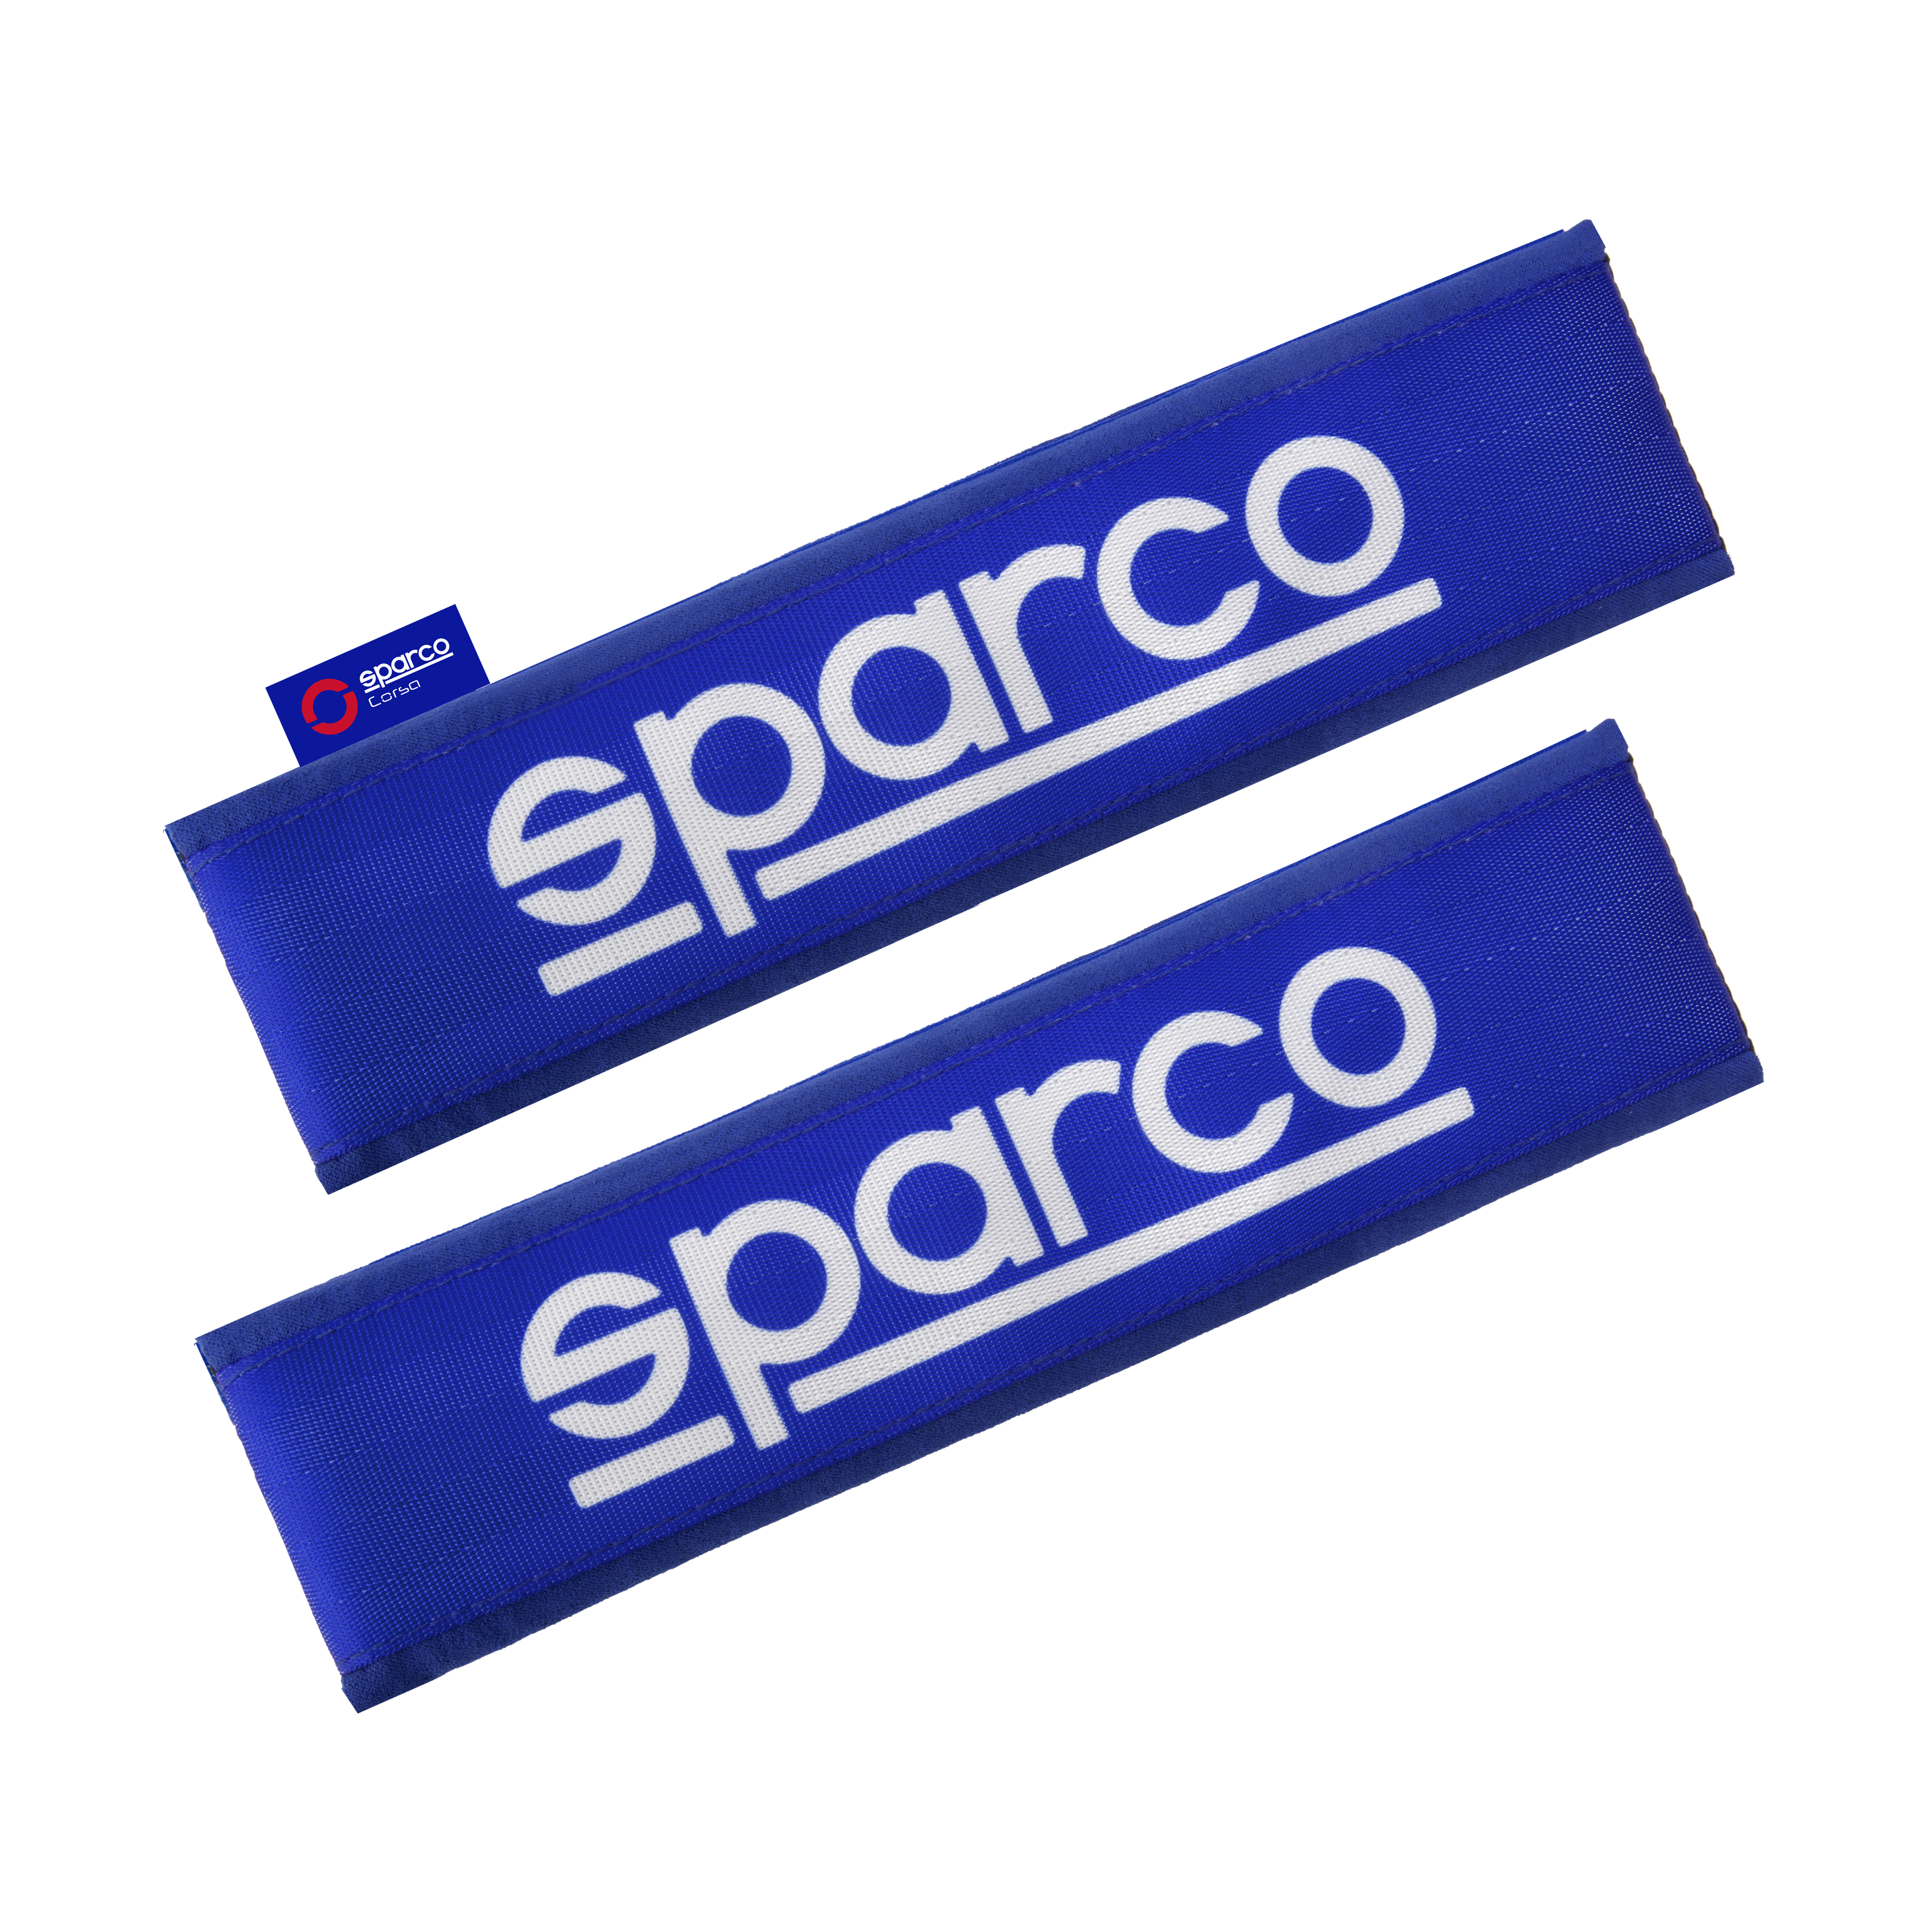 Seat belt pad Sparco, different colors, 12,70 €